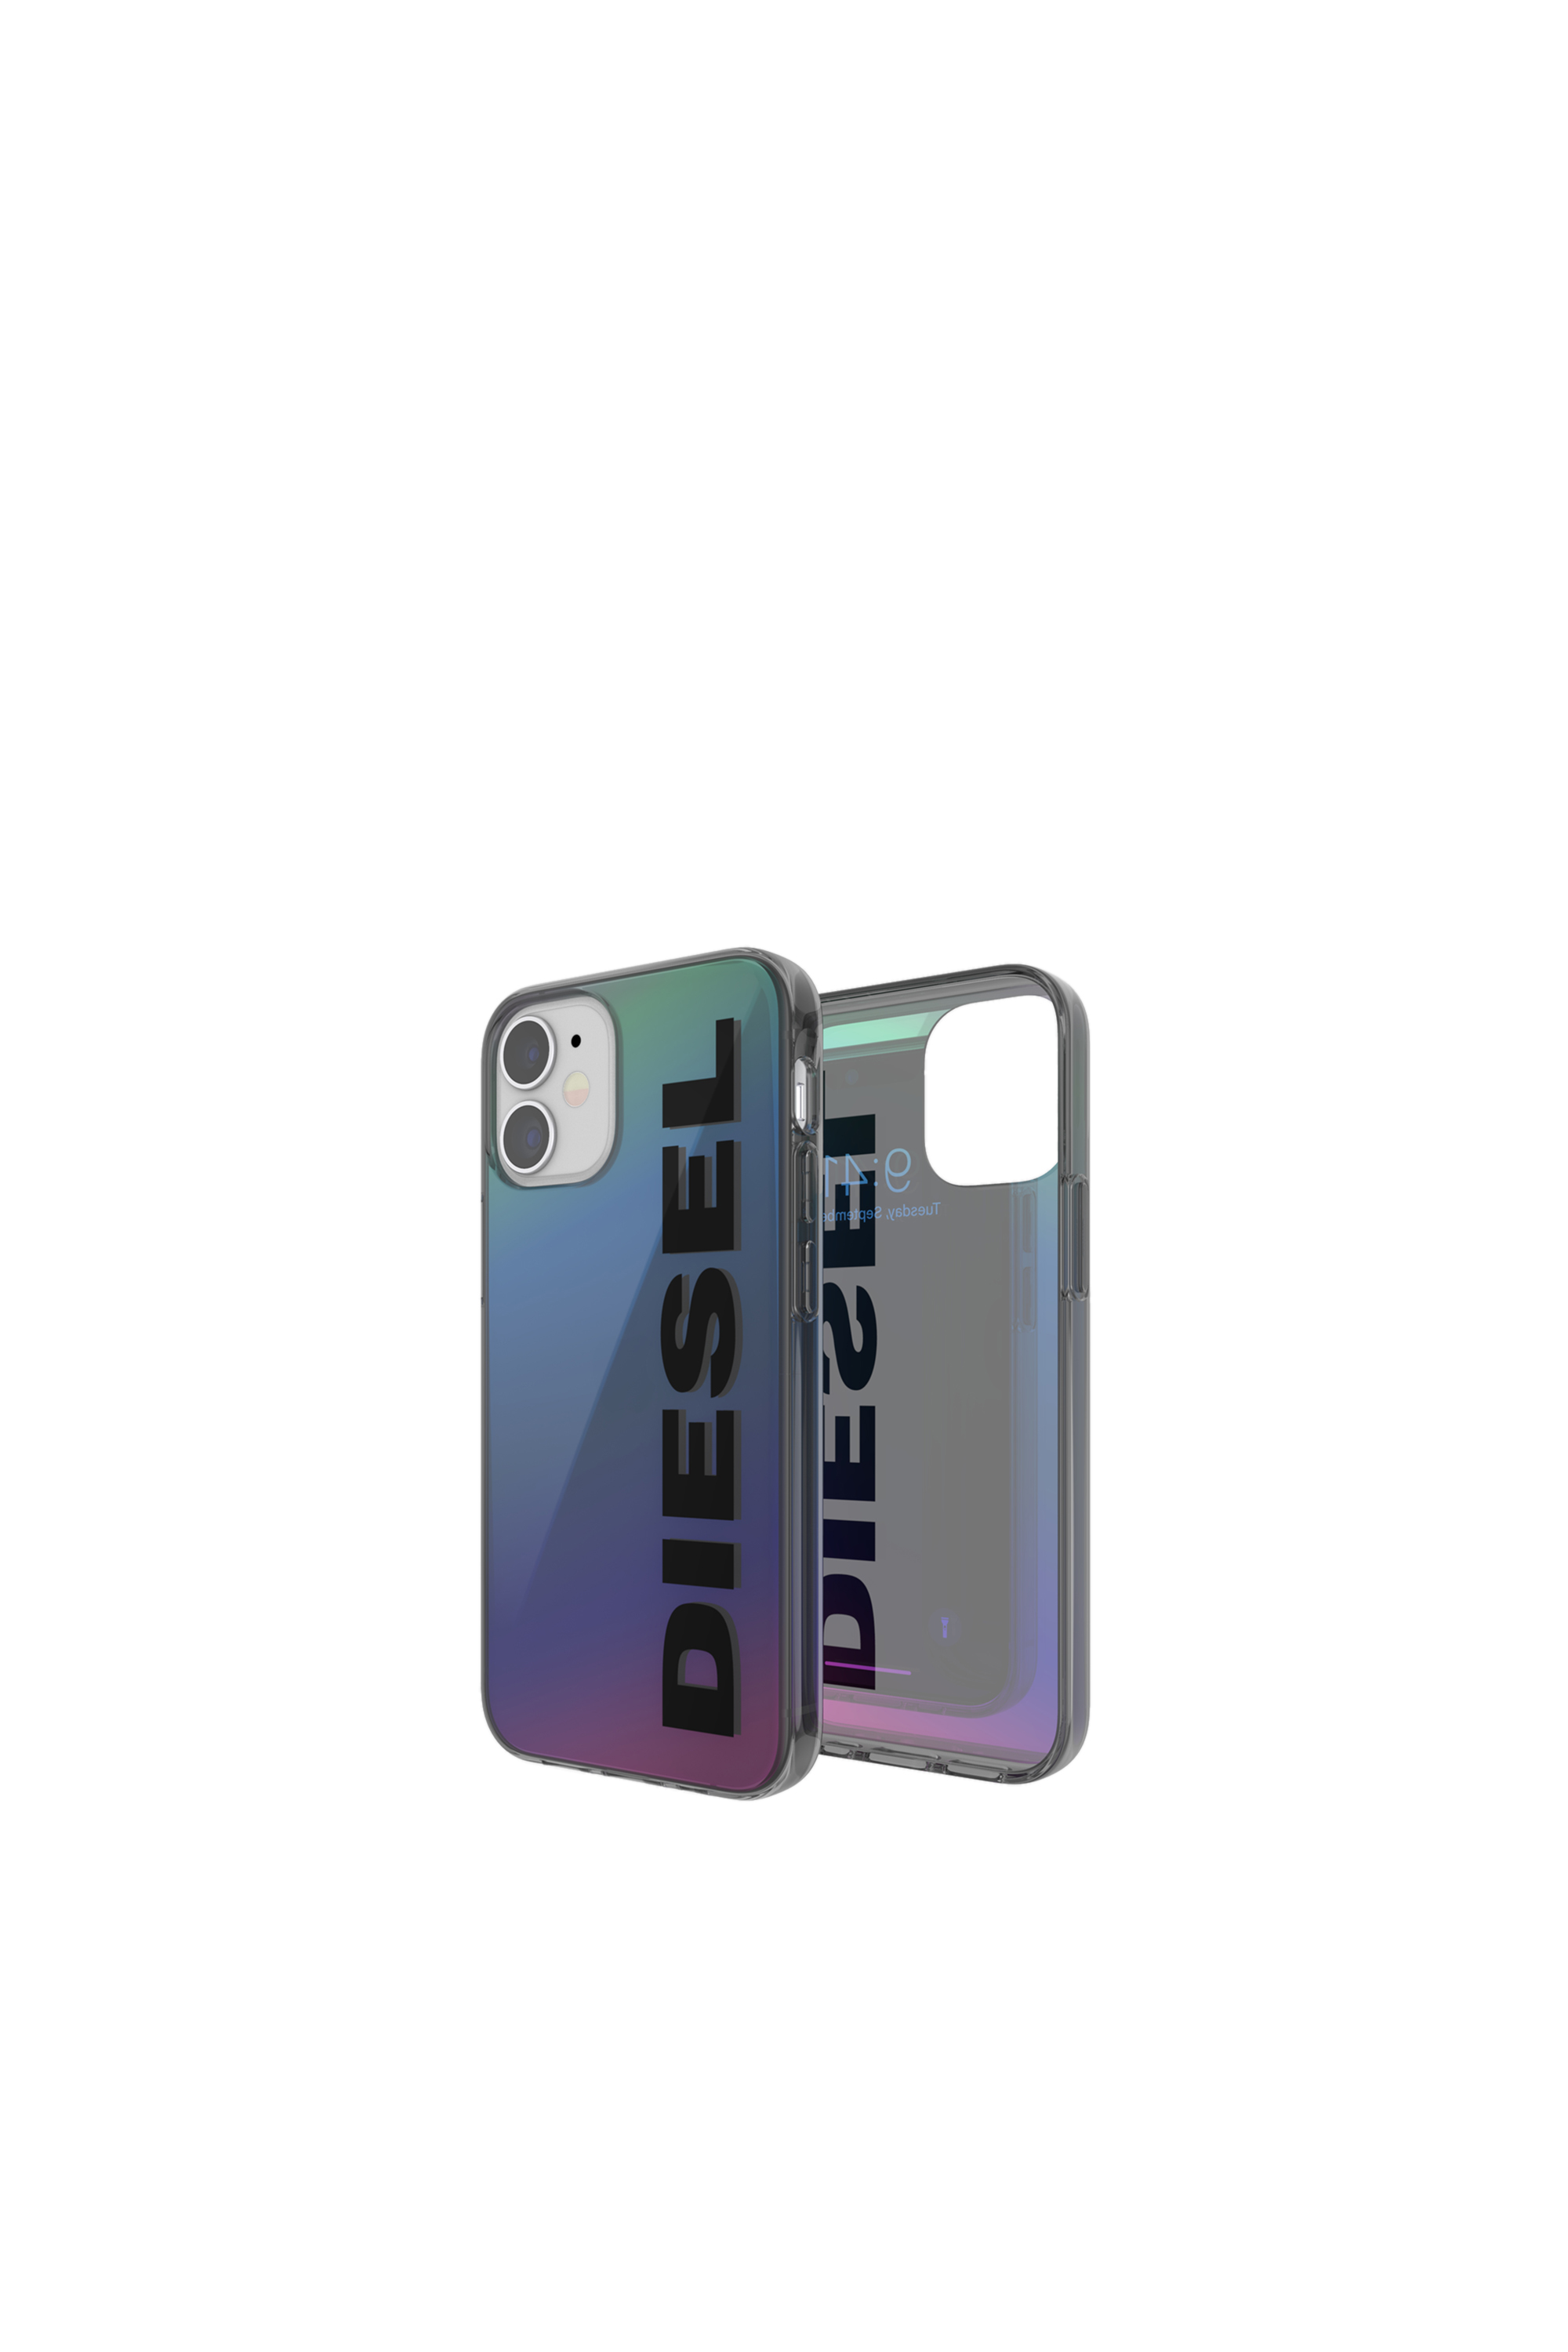 Diesel - Cover olografica in TPU per i Phone 12 Mini - Cover - Unisex - Multicolor